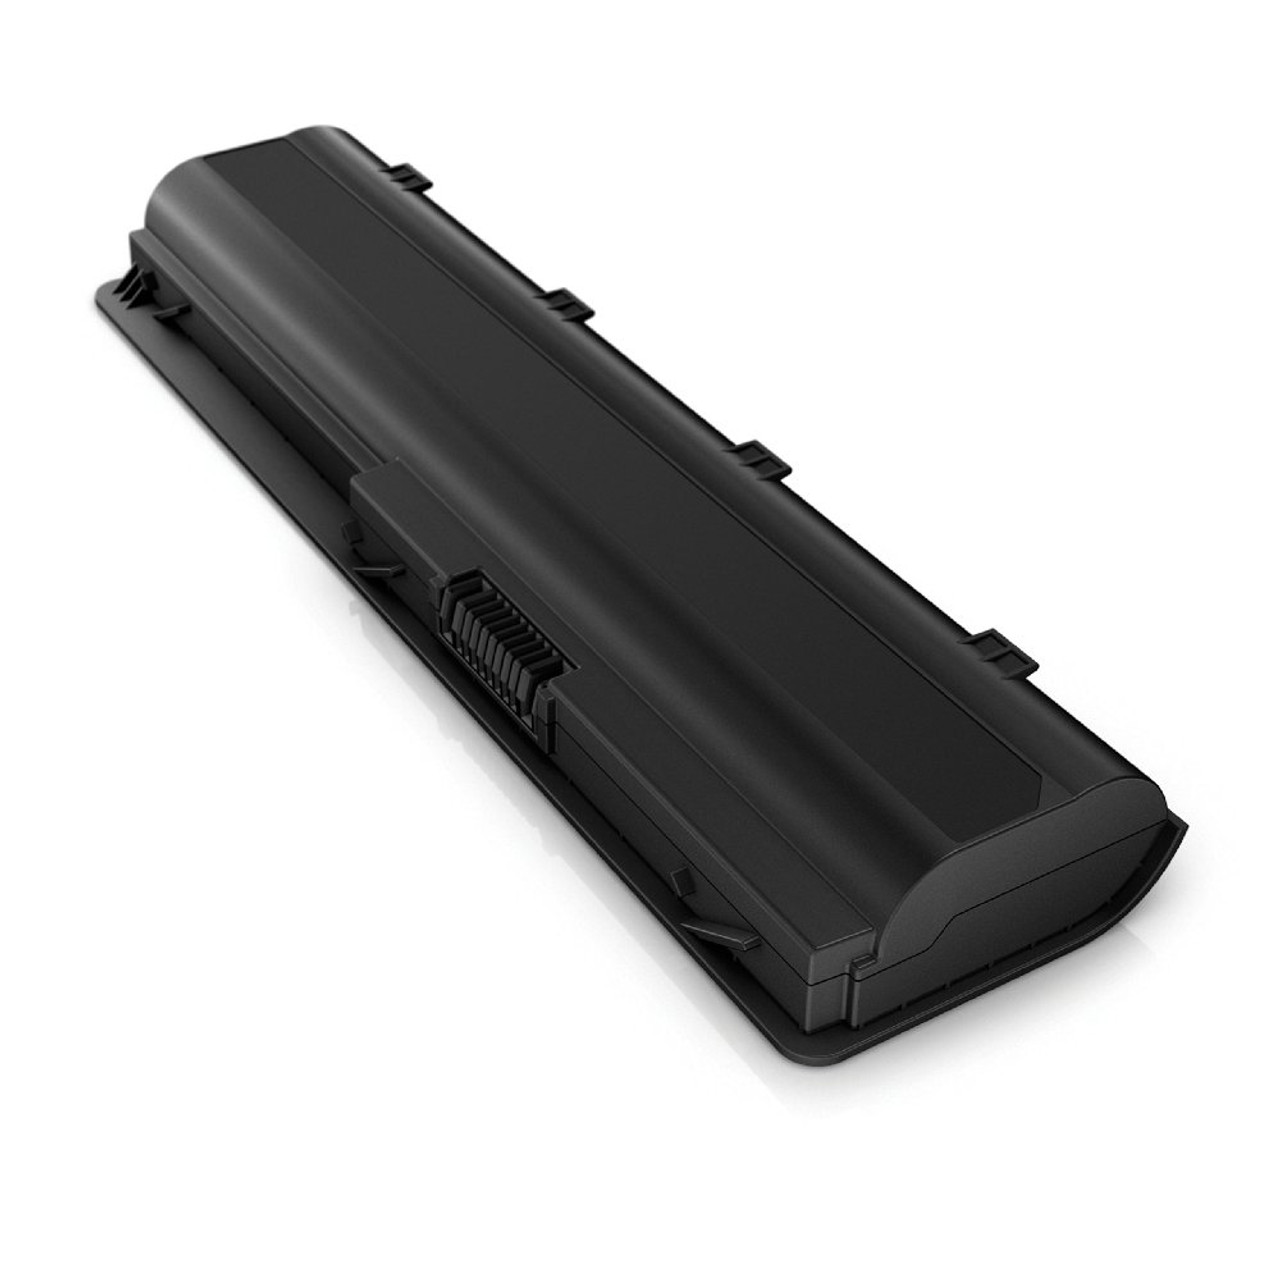 QK644AA - HP SX06XL QK644AA Notebook Battery 5100 mAh Lithium Ion (Li-Ion) 10.8 V DC